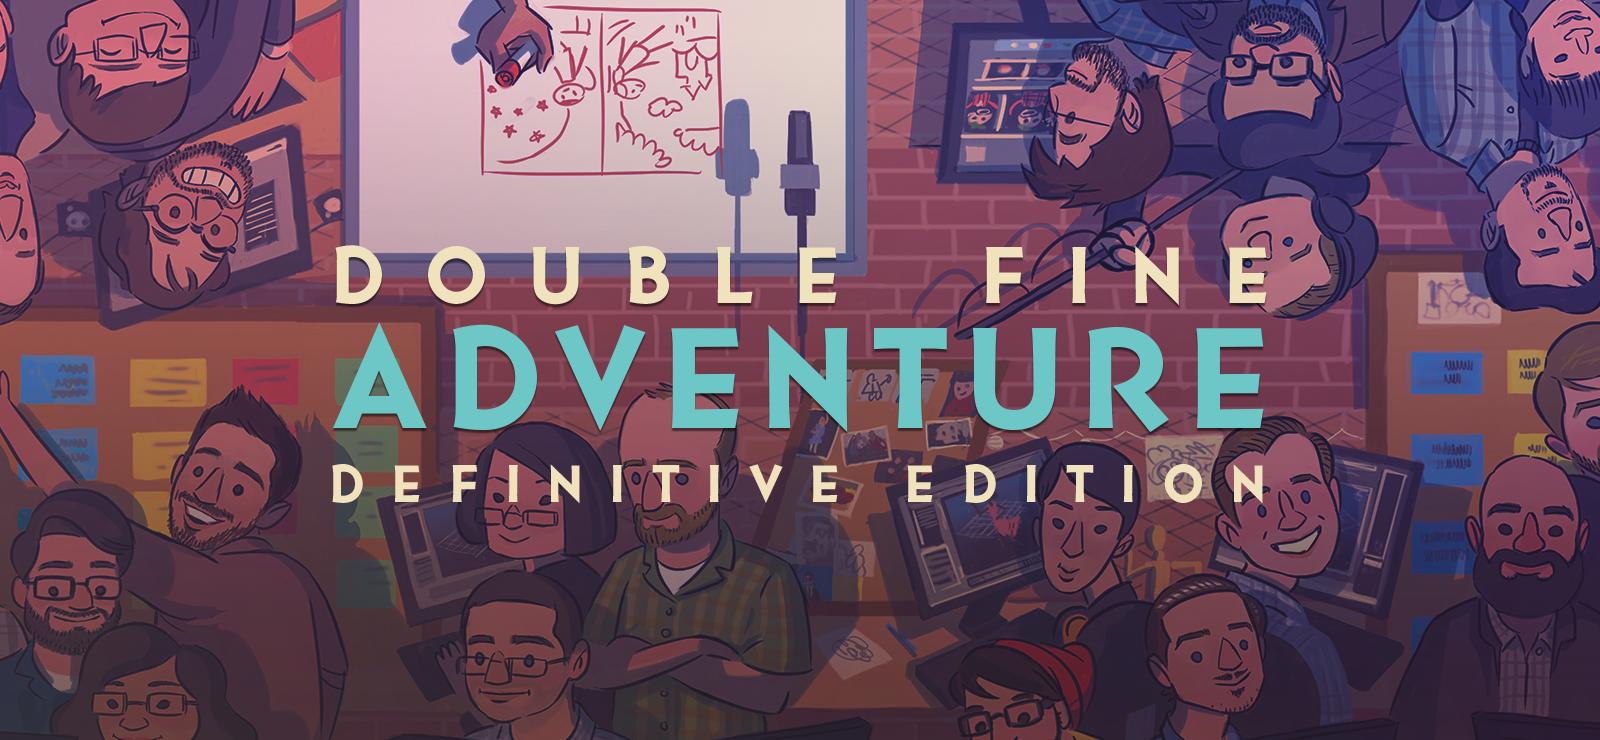 Double Fine Adventure Definitive Edition